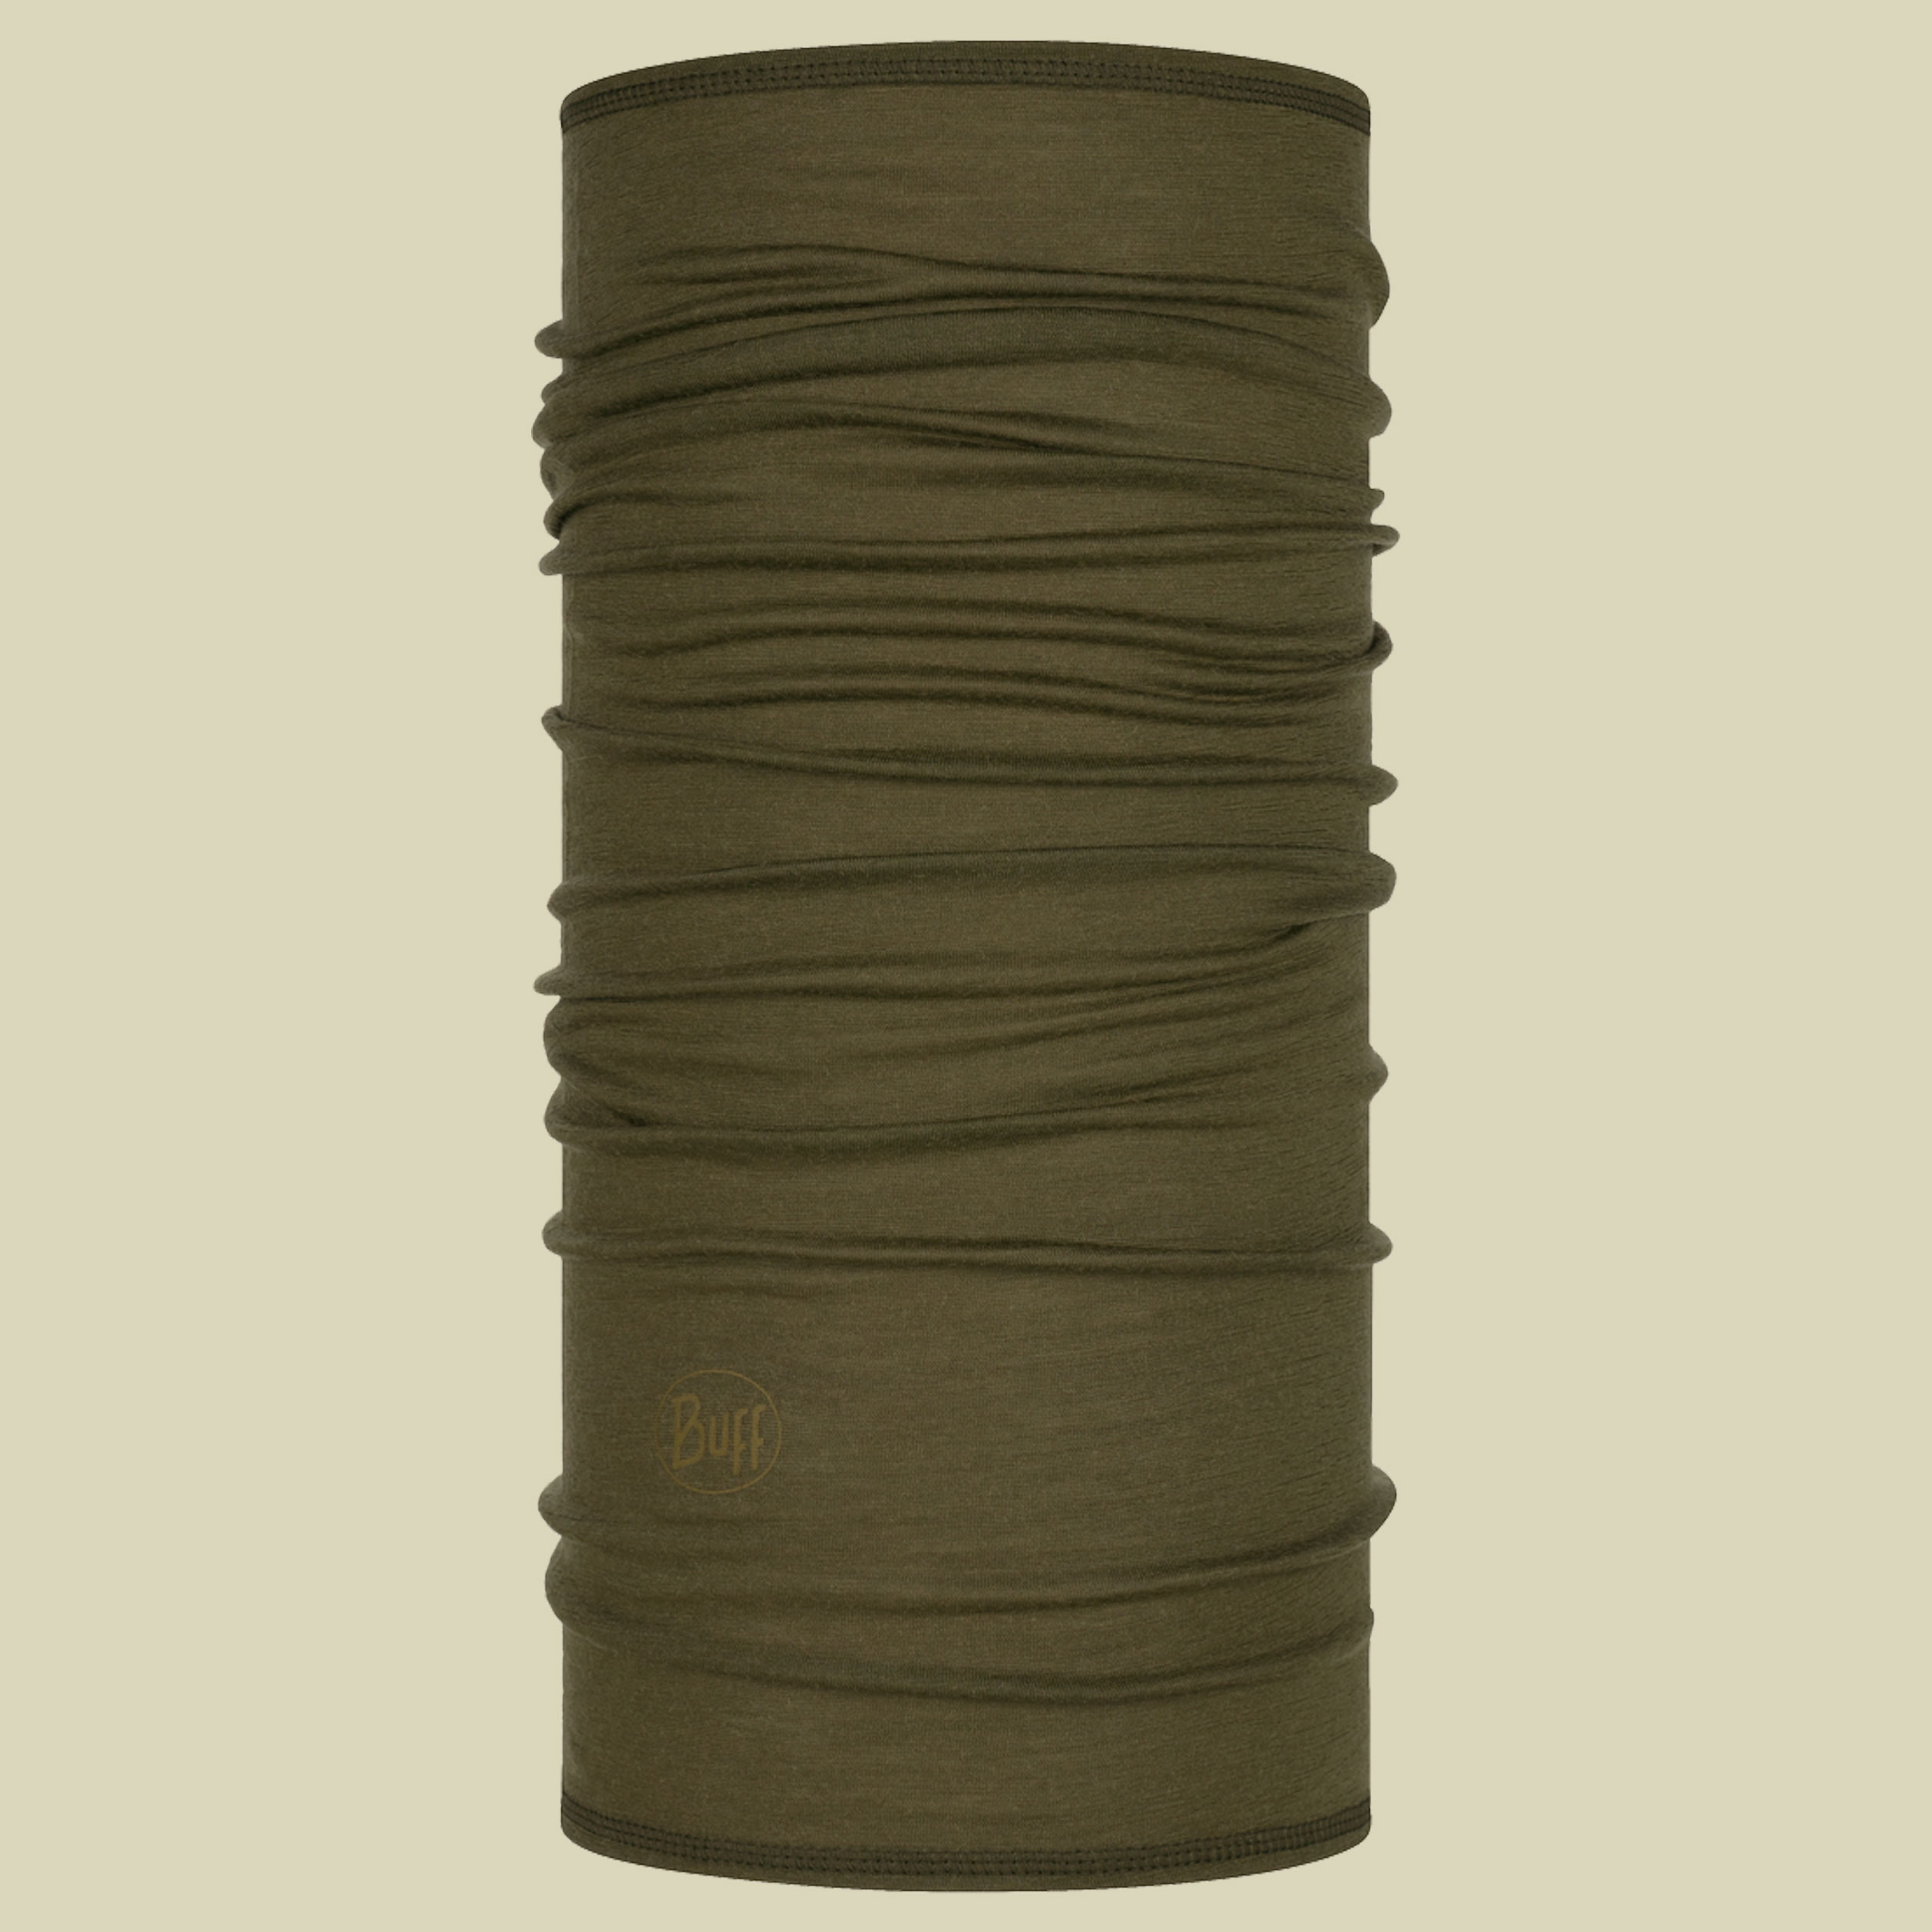 Lightweight Merino Wool Solid Größe one size Farbe solid bark